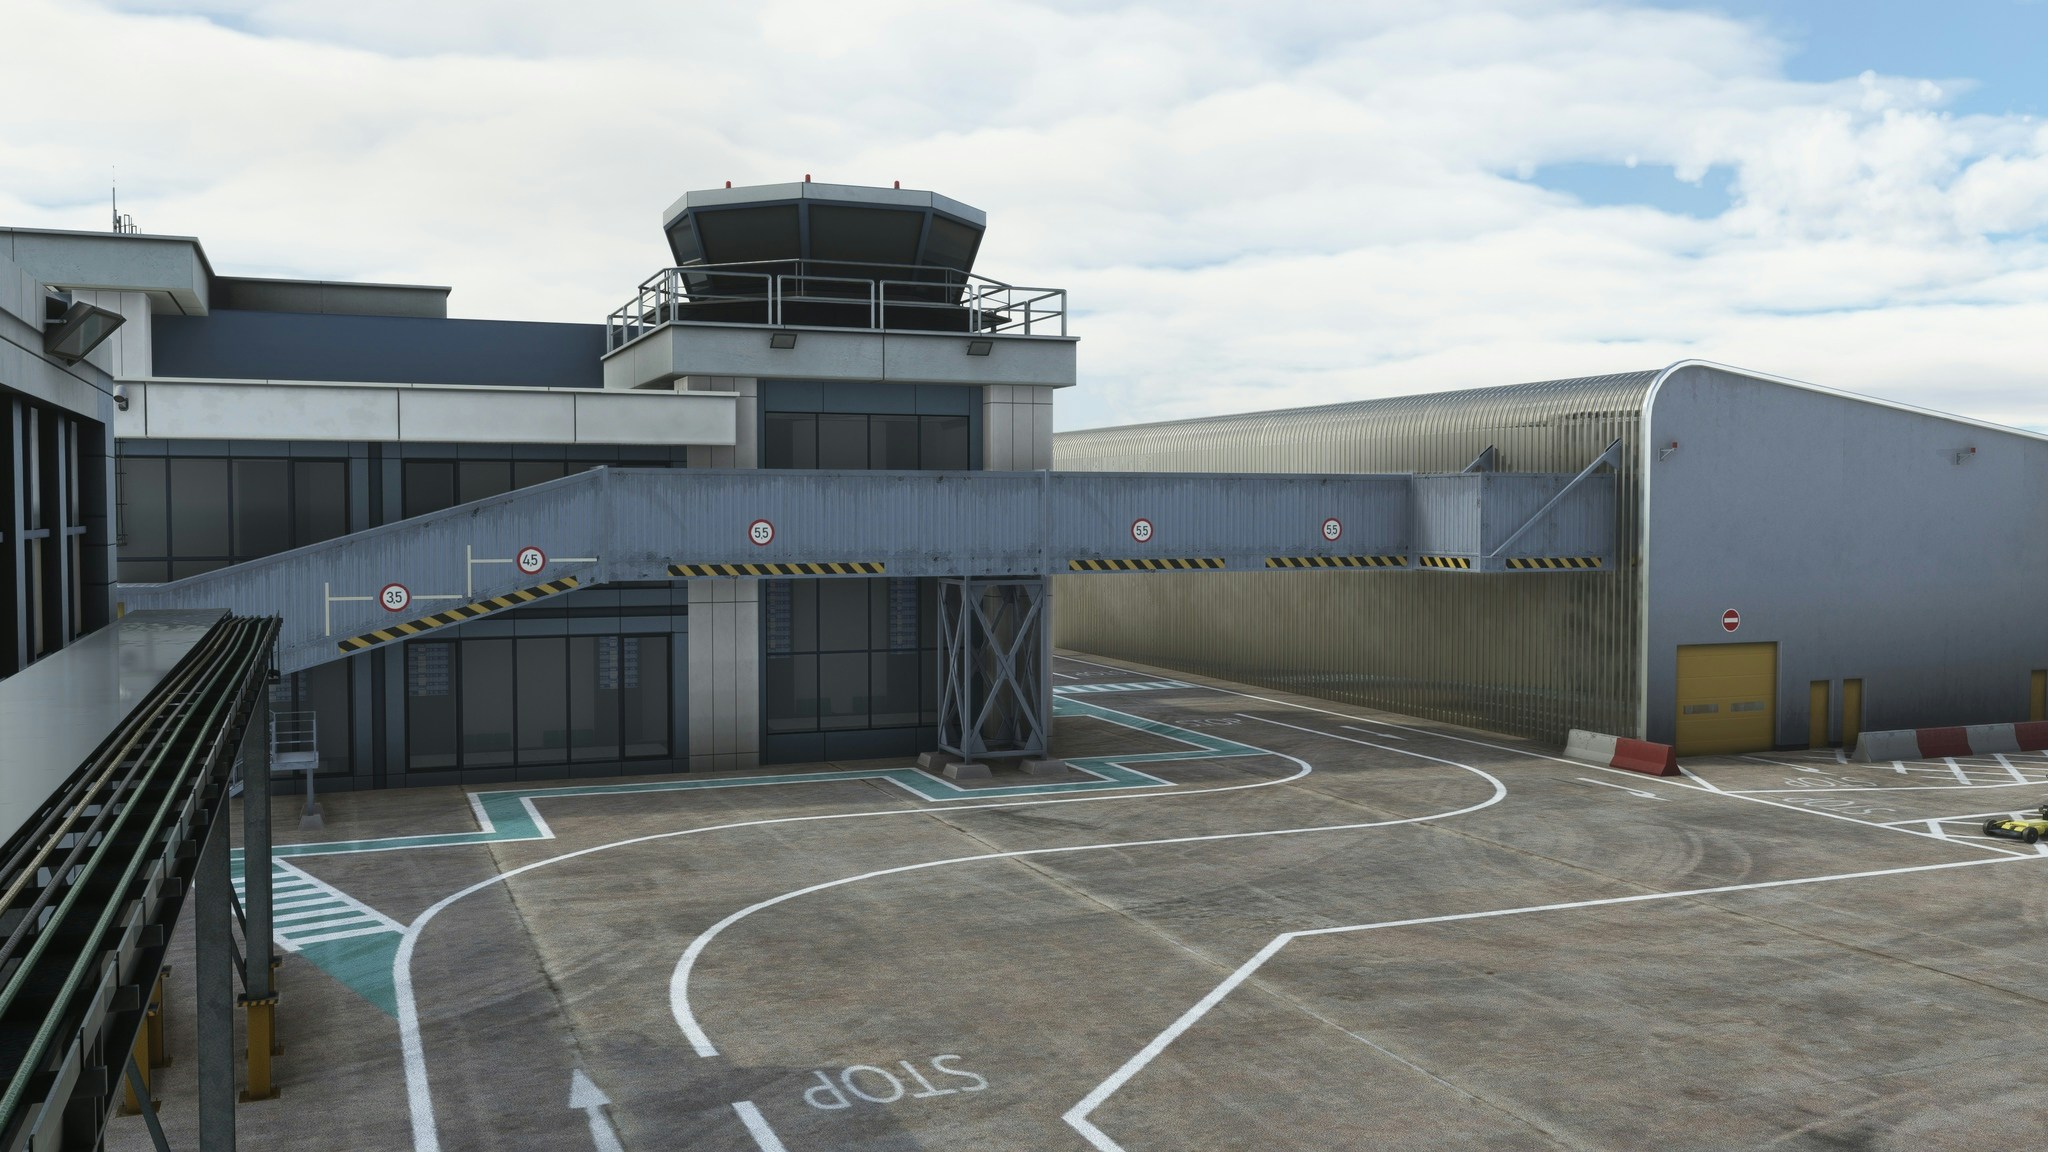 Orbx Announces EGLC London City Airport v2 for MSFS